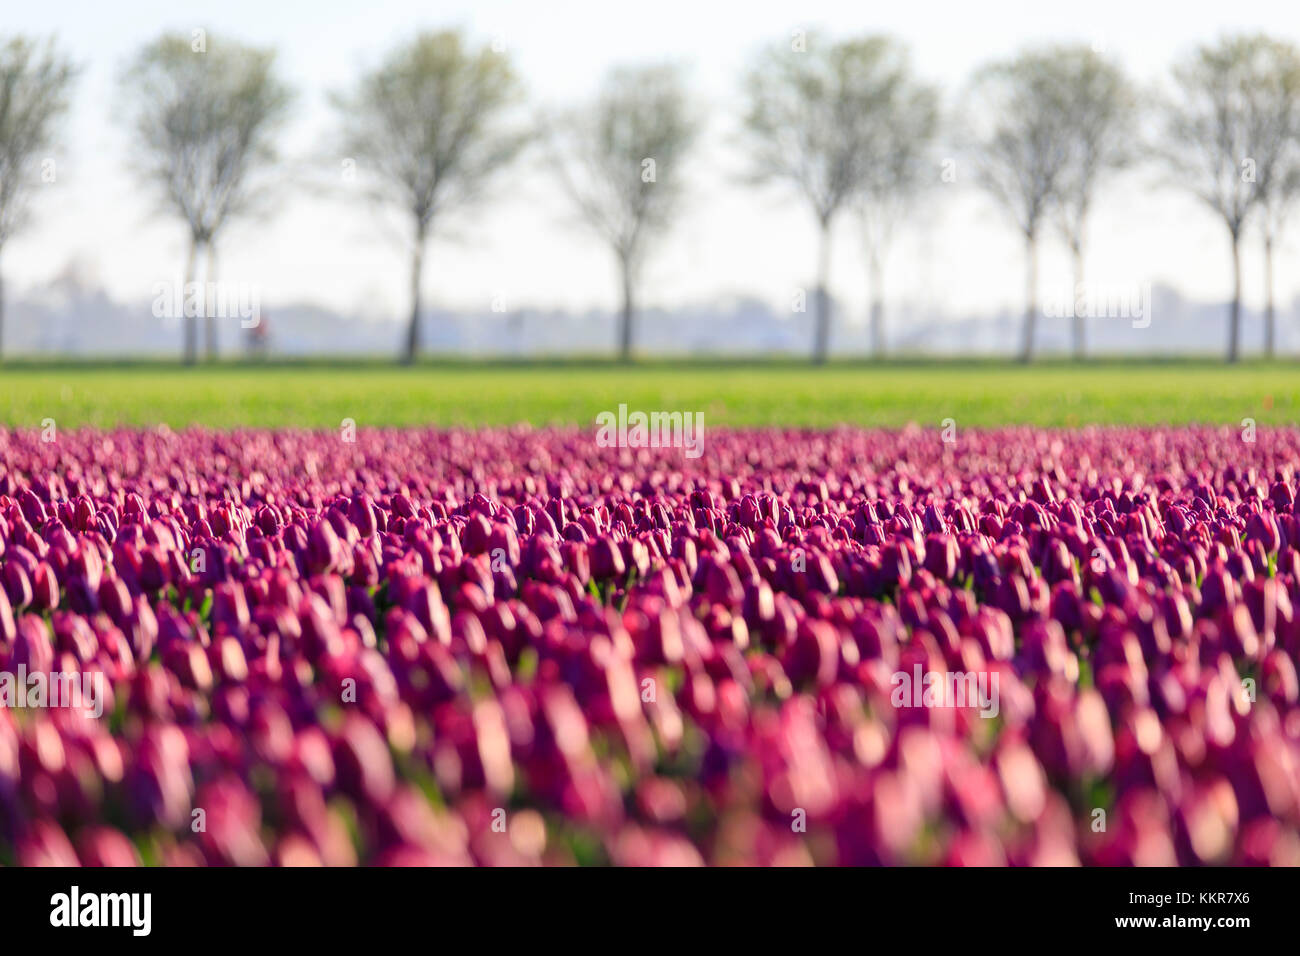 Die bunten Felder der Tulpen in voller Blüte Frames die Bäume in der Landschaft in der Morgendämmerung de Rijp alkmaar Nord Holland Europa Stockfoto